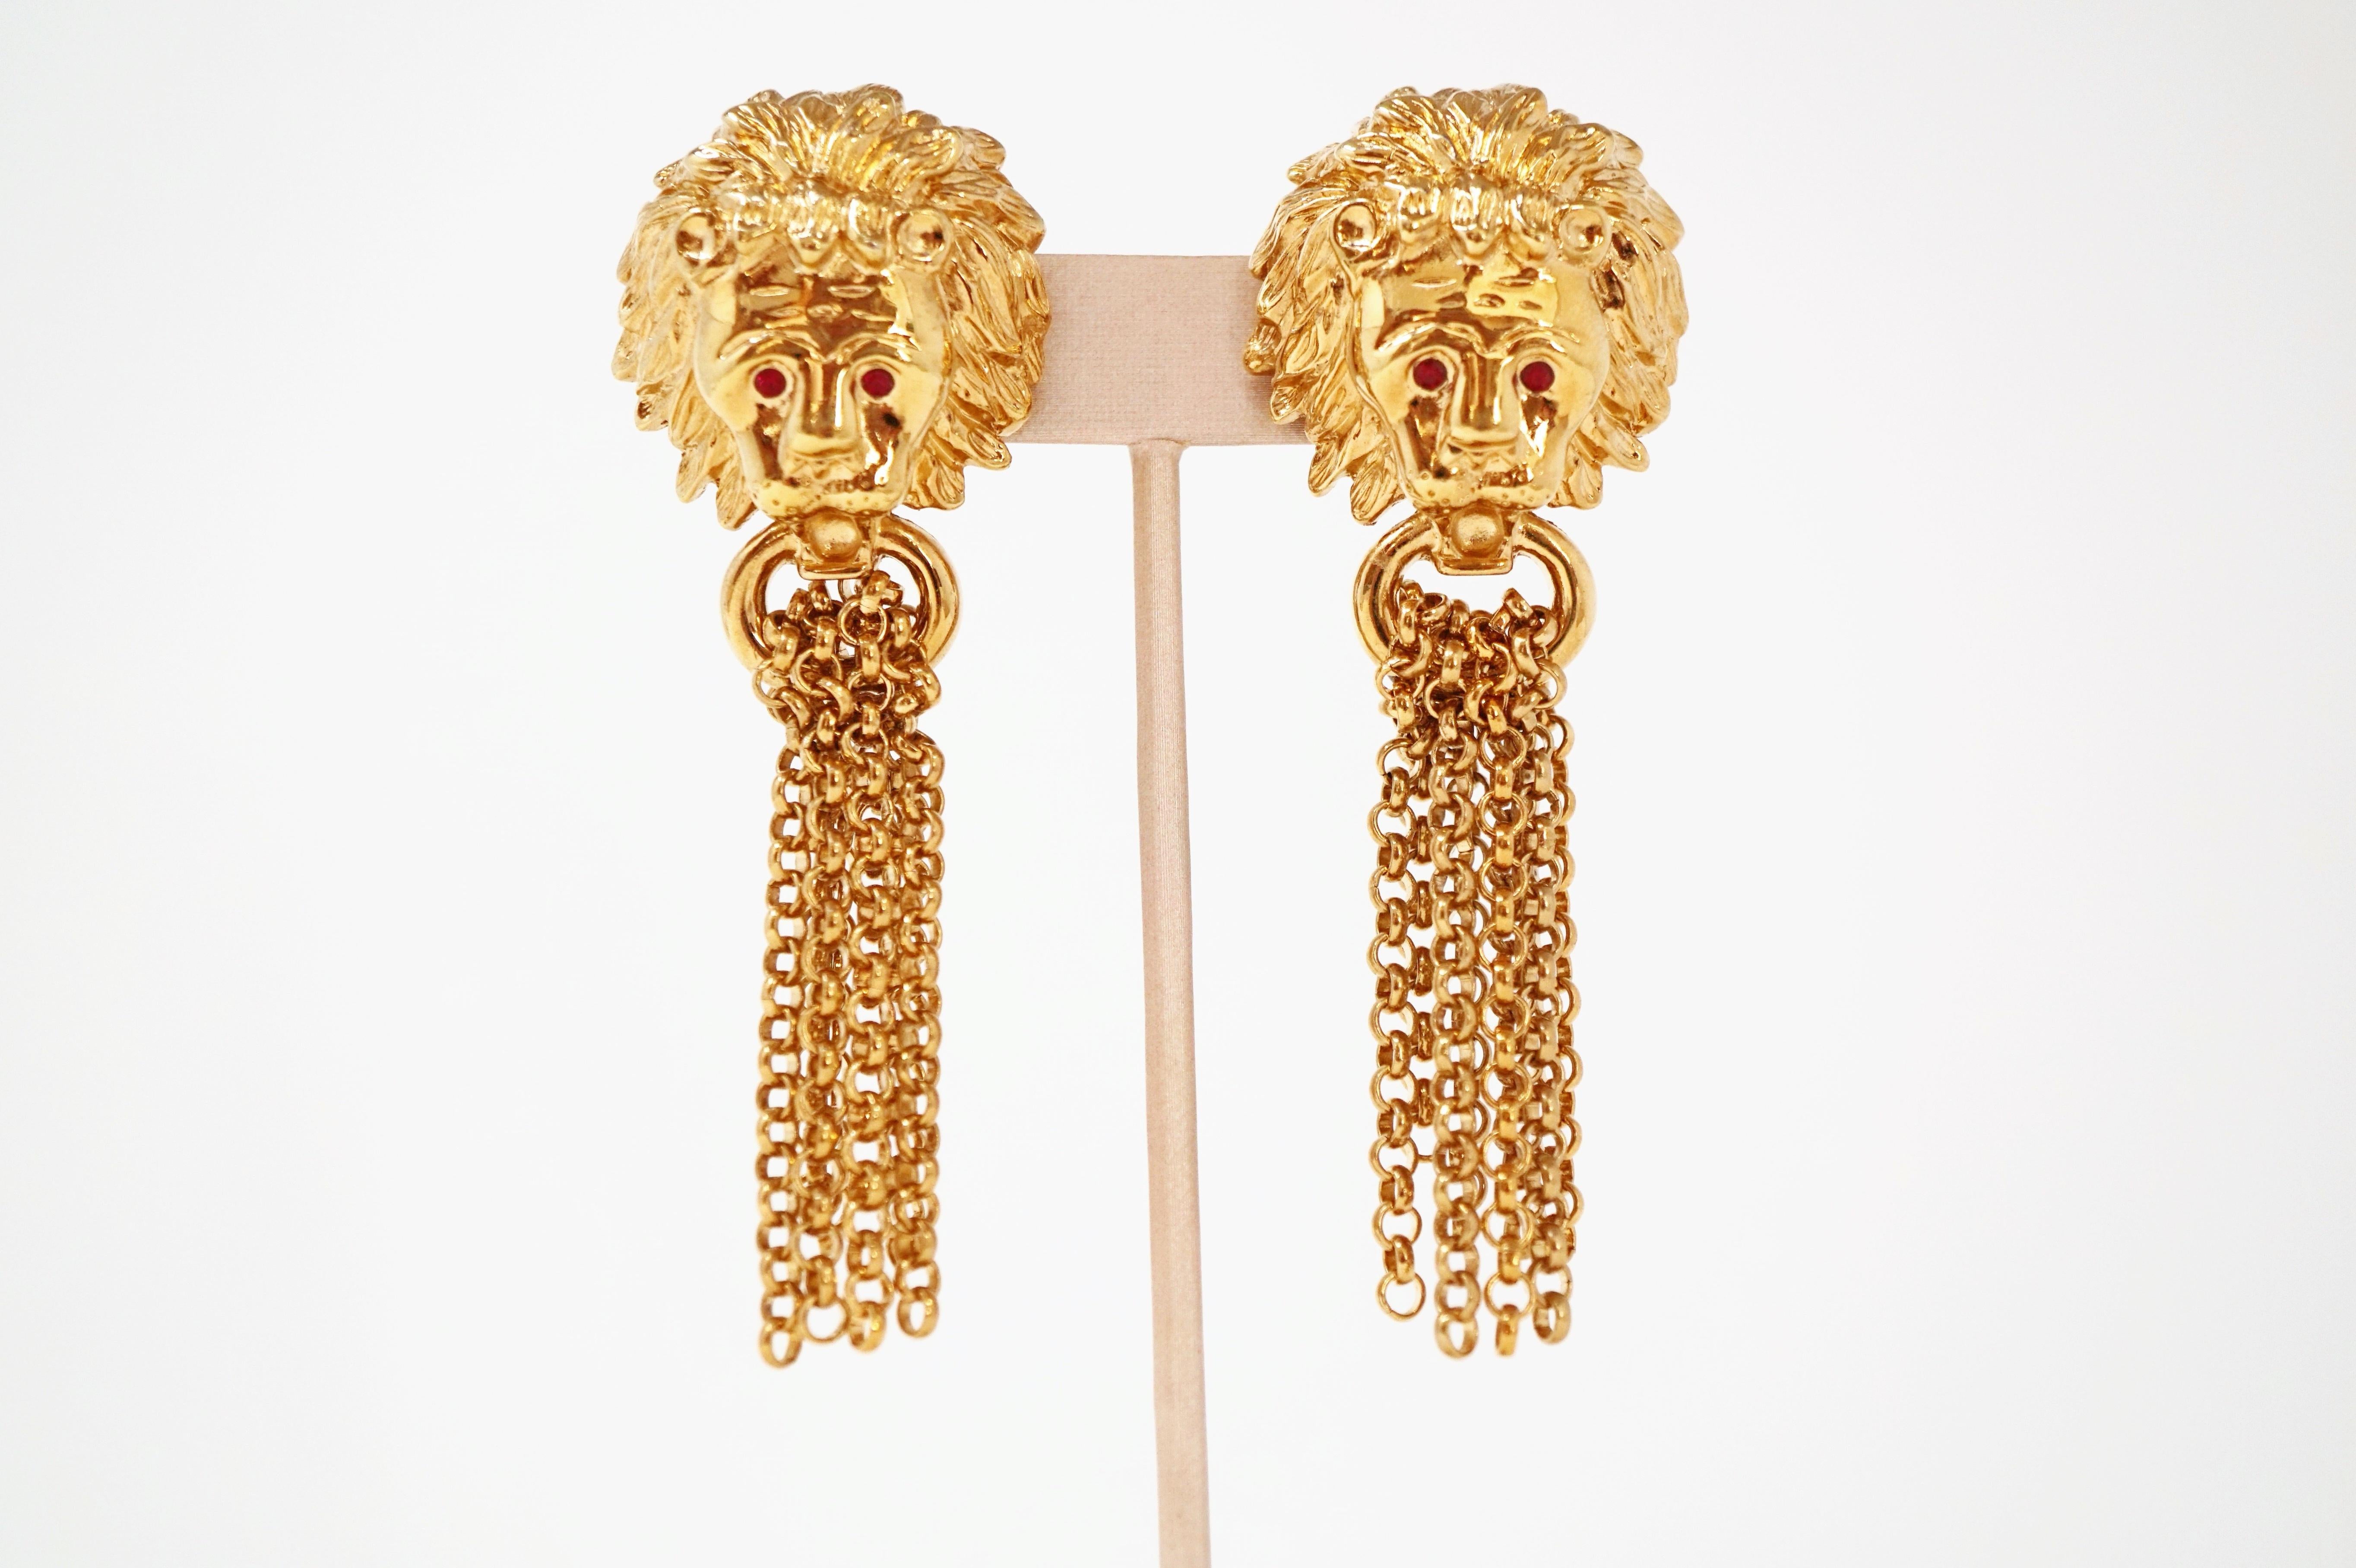 Modern 1980s Oversized Italian Designer Lion Statement Earrings with Chain Tassels